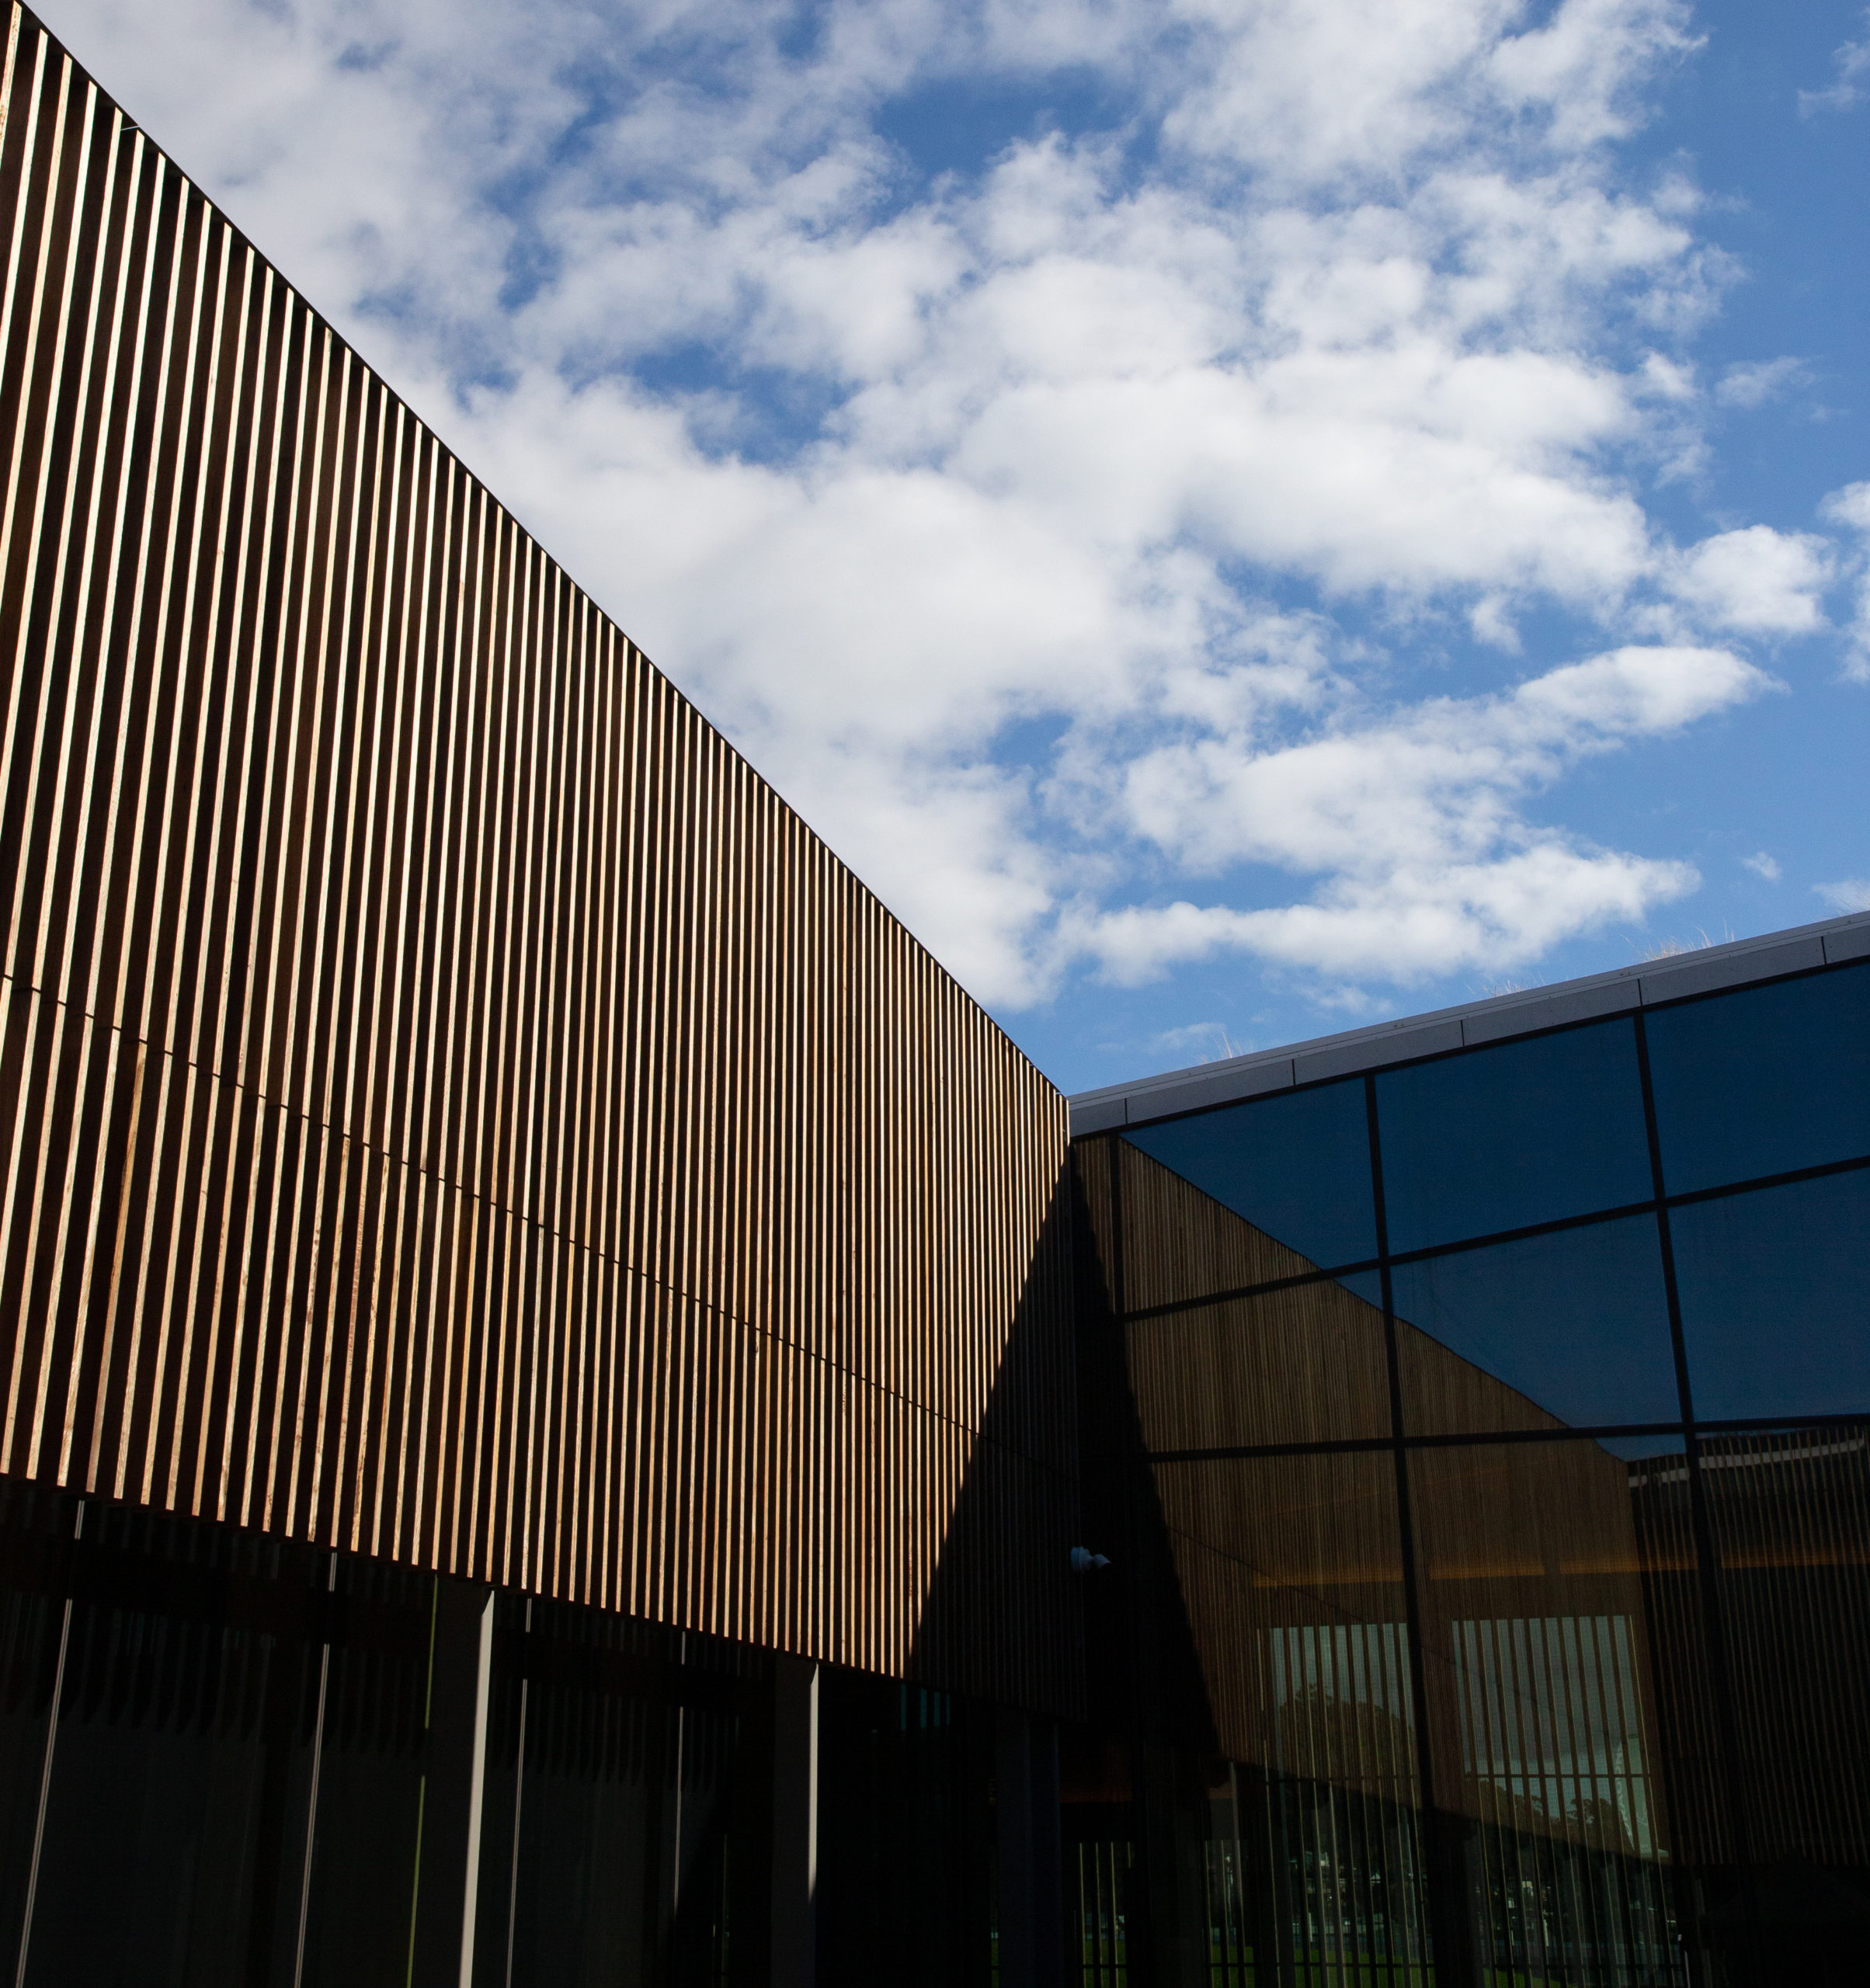 Award-winning Cradle Coast Campus evokes a sense of calm with Tasmanian timber